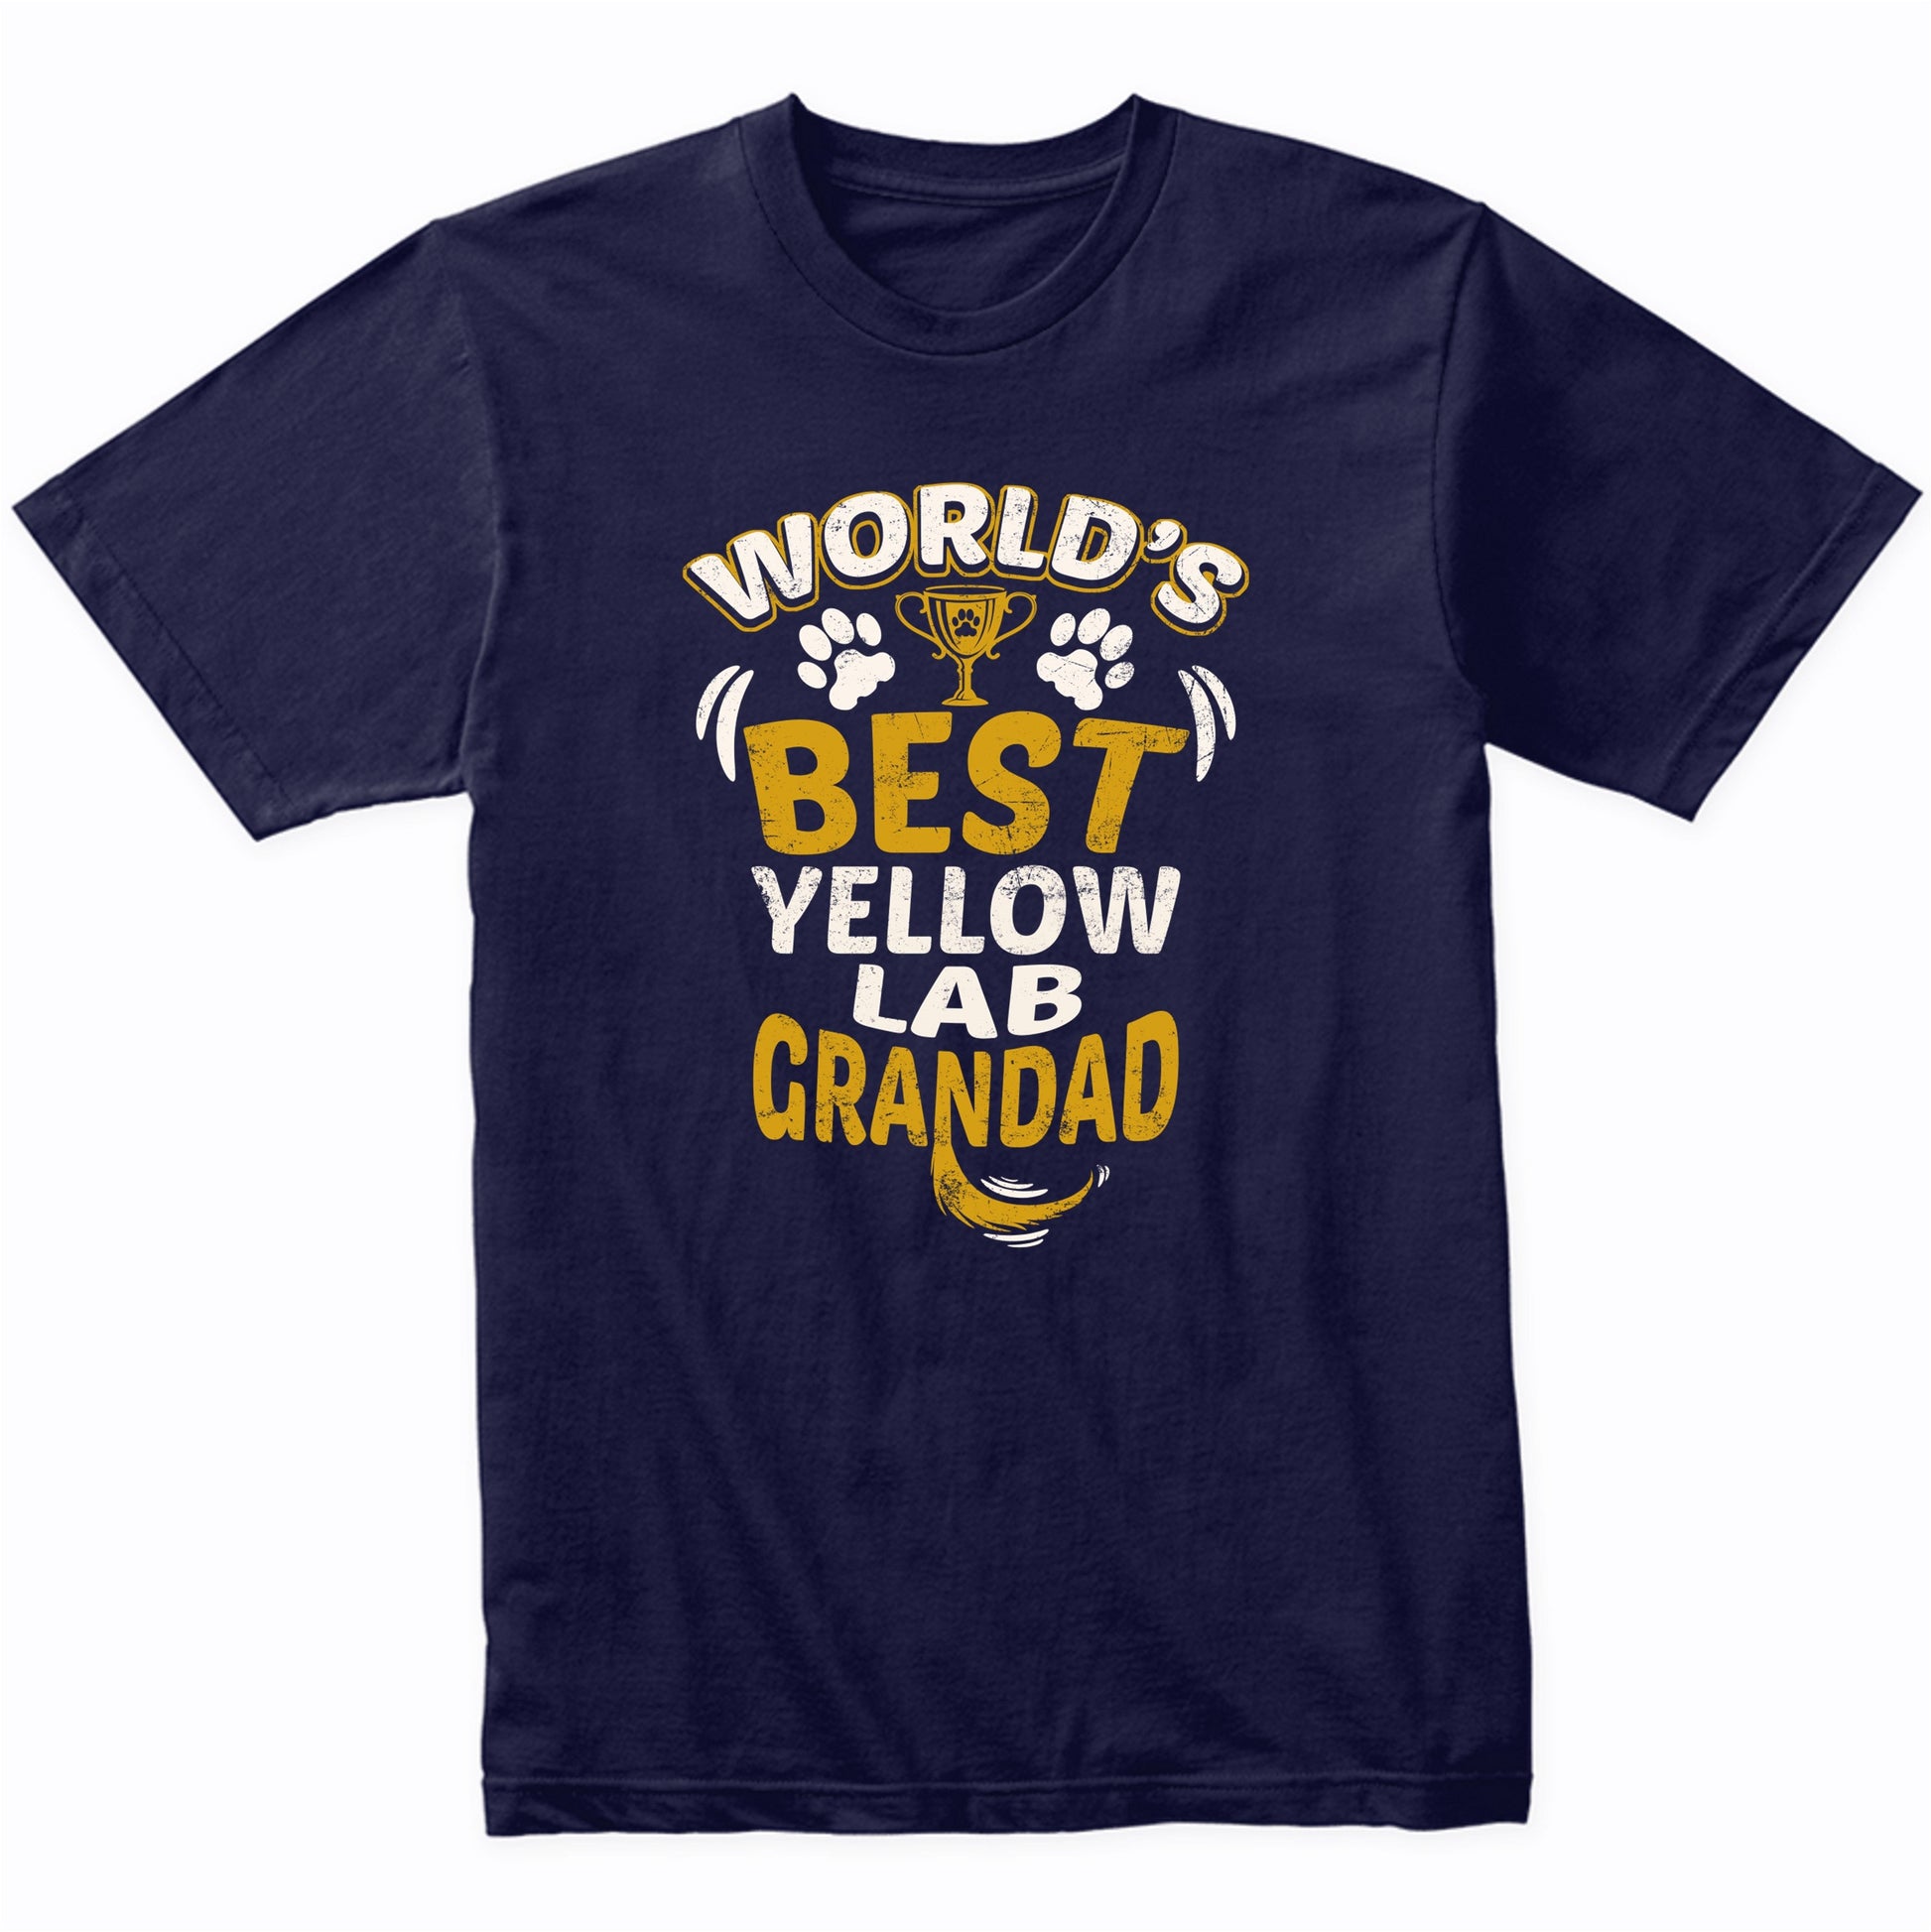 World's Best Yellow Lab Grandad Graphic T-Shirt